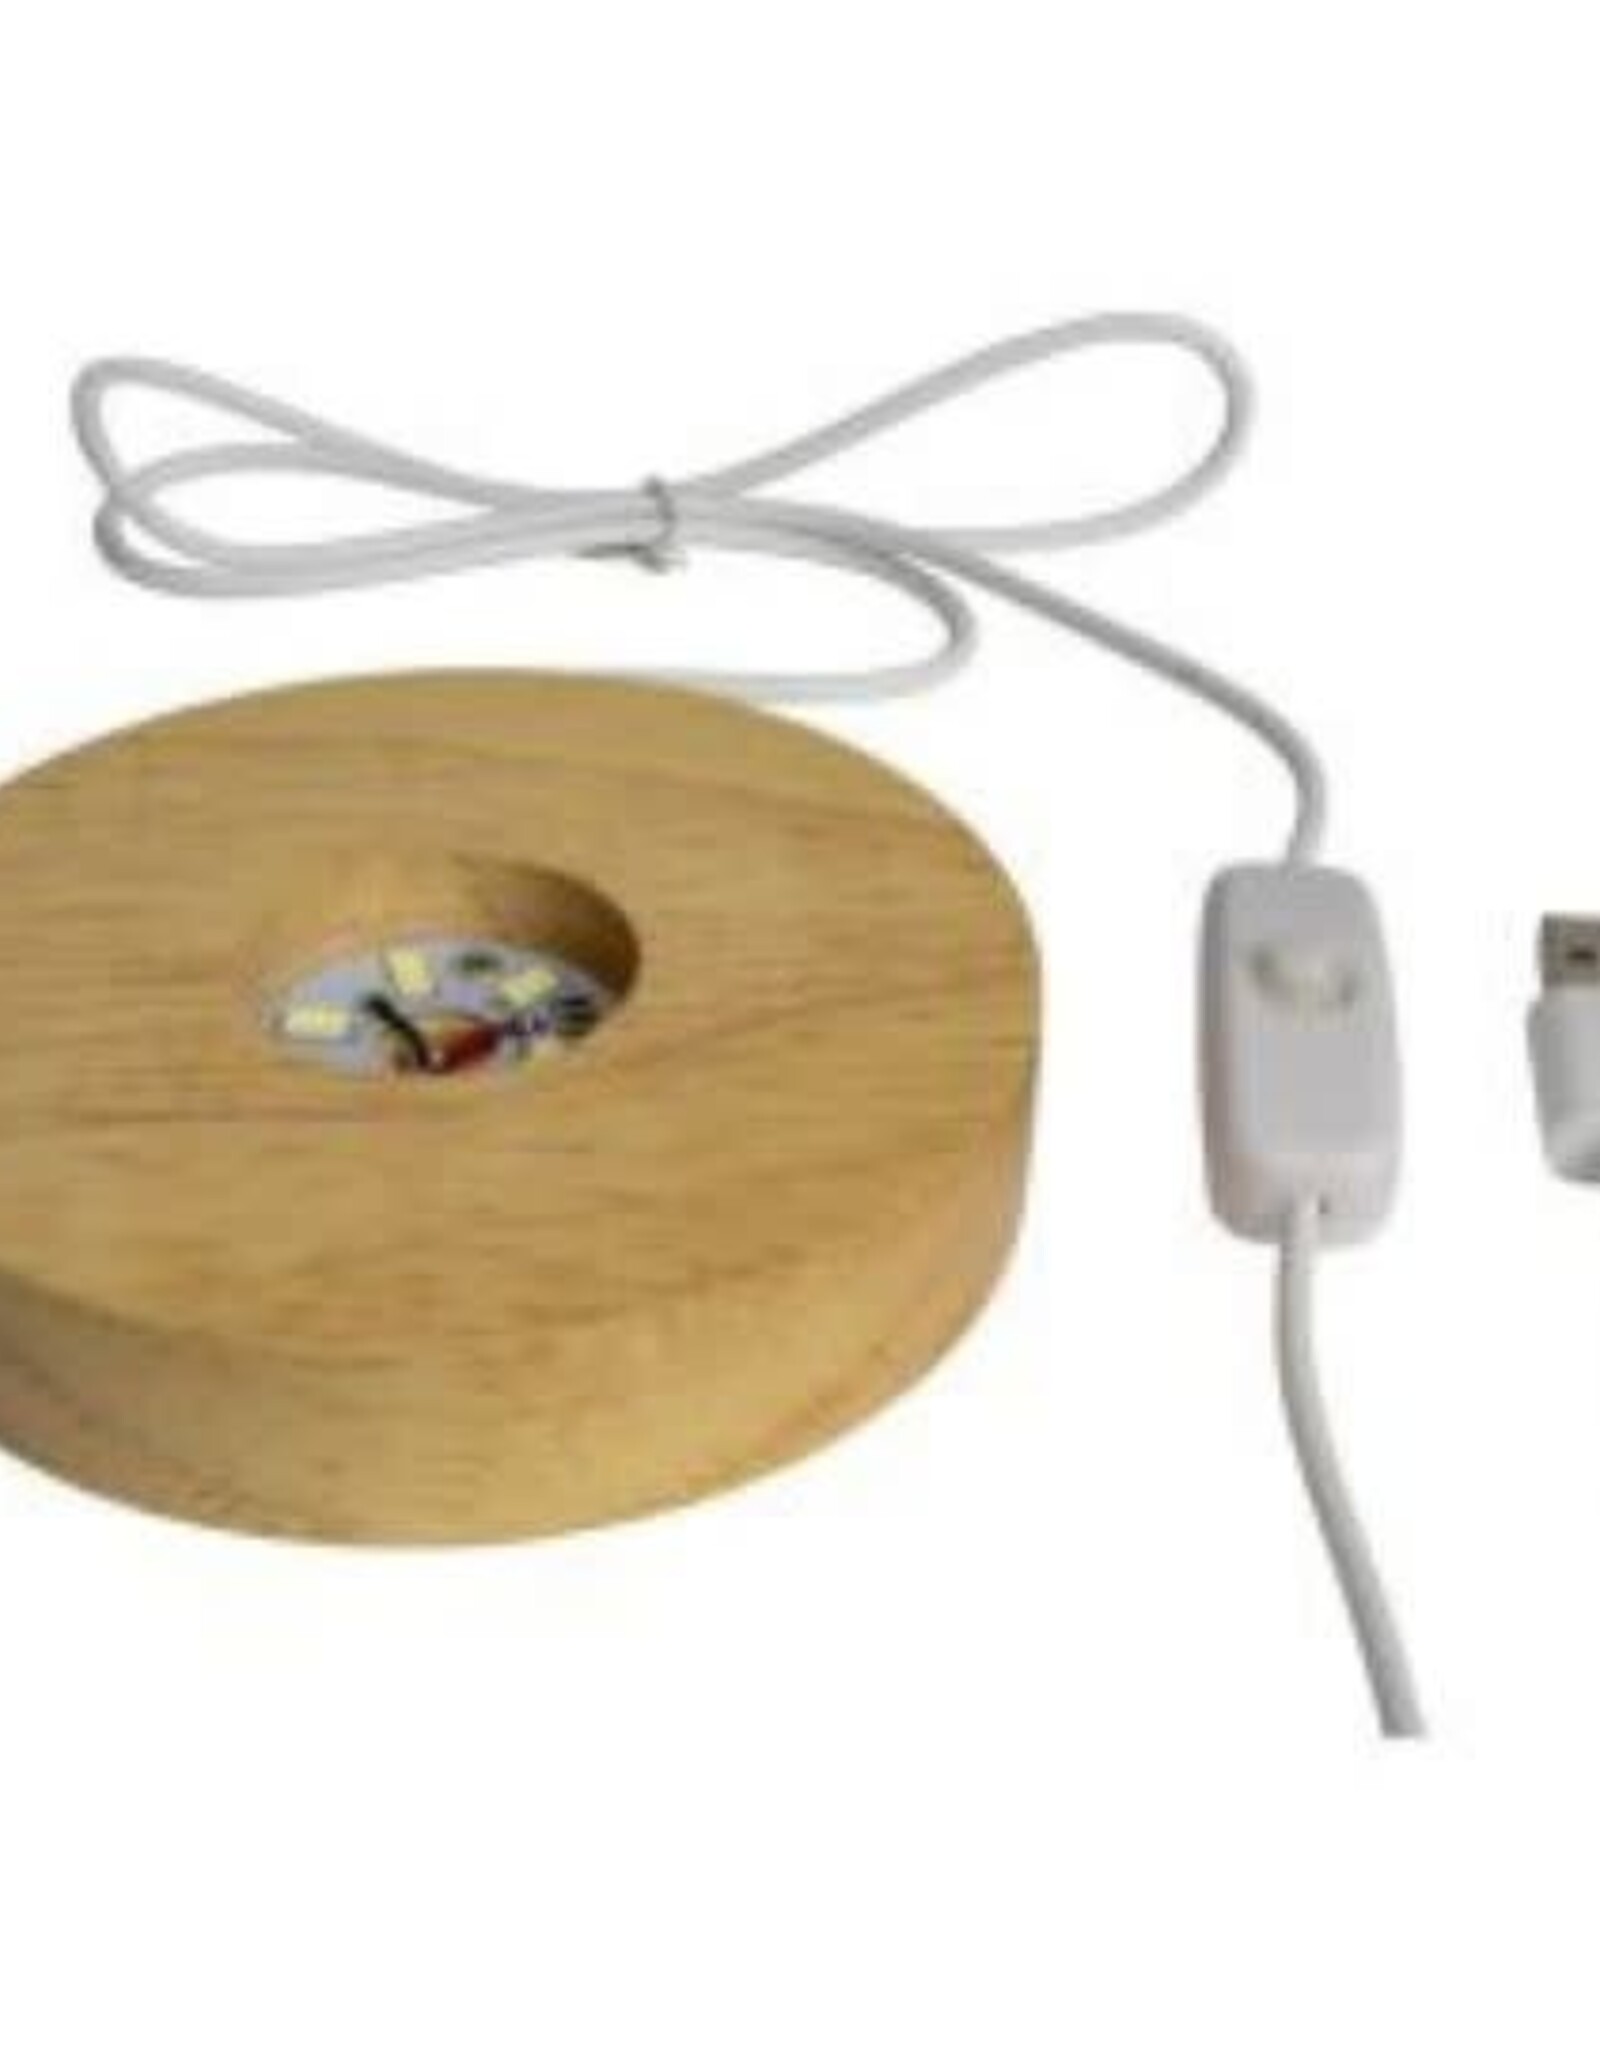 Wood LED Light Base w USB cord- White 4" x 0.75"